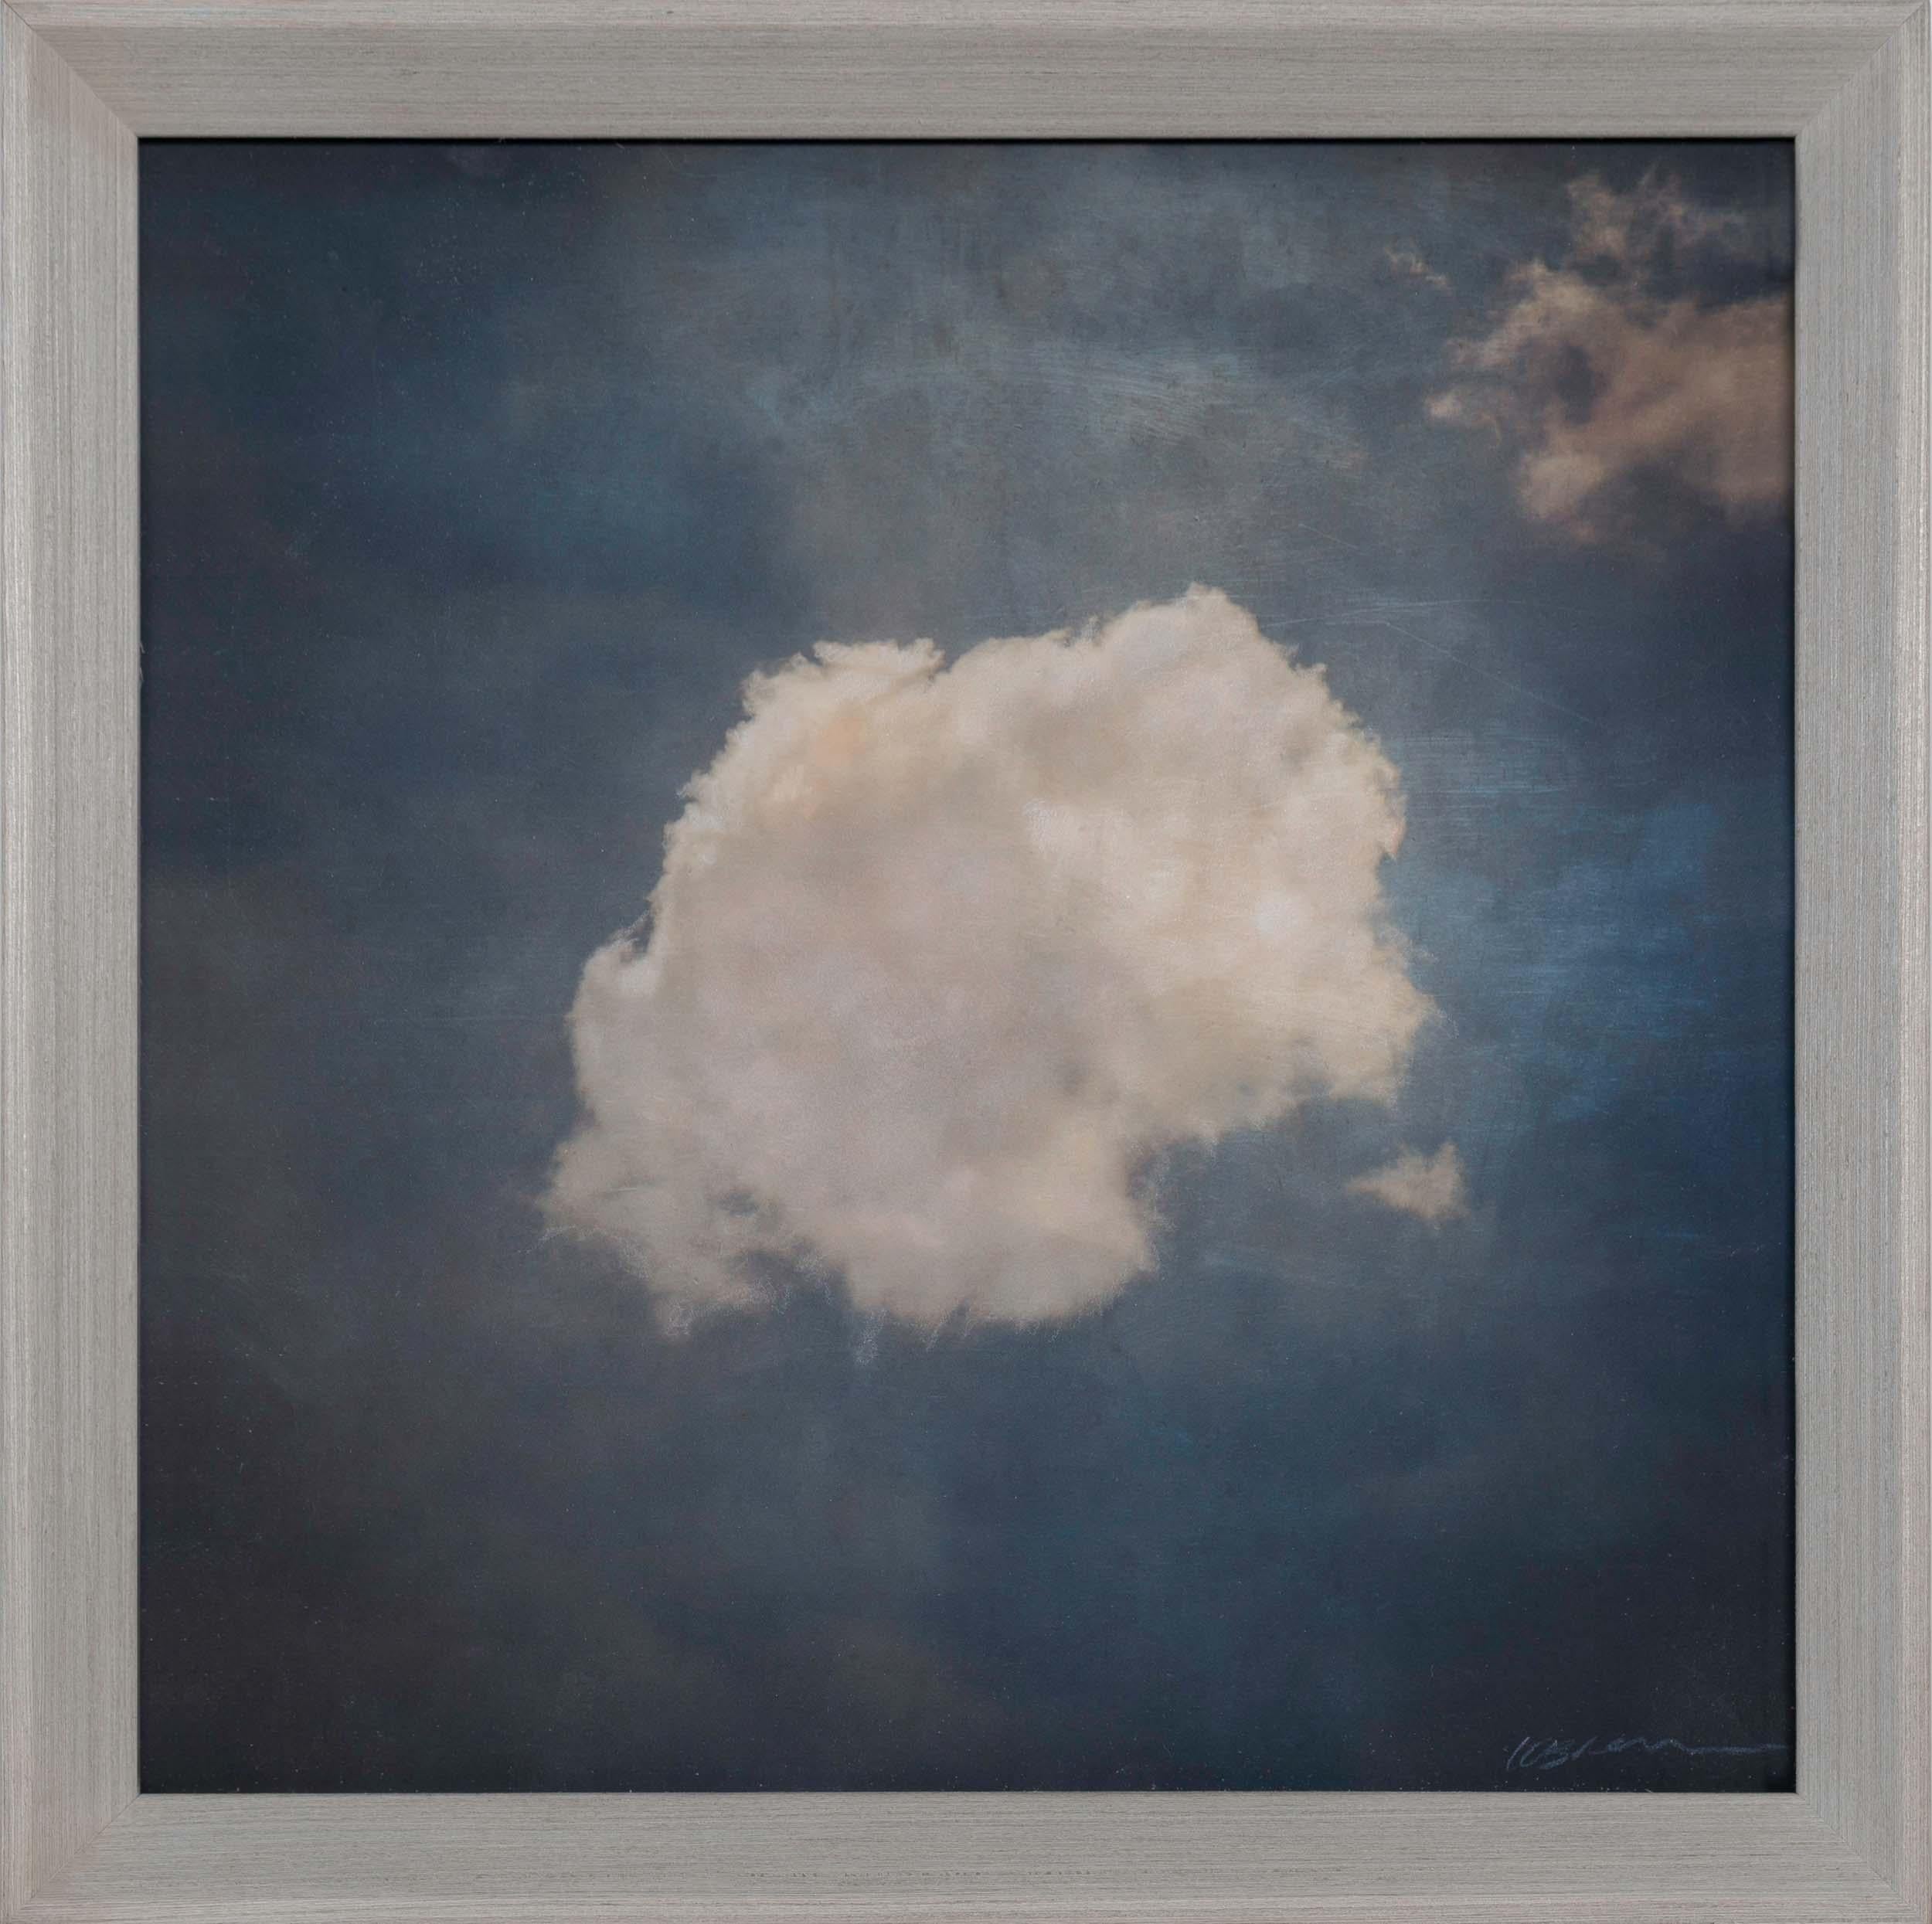 Kate Breakey Landscape Photograph - Twelve Clouds, Softly, Slowly (C)